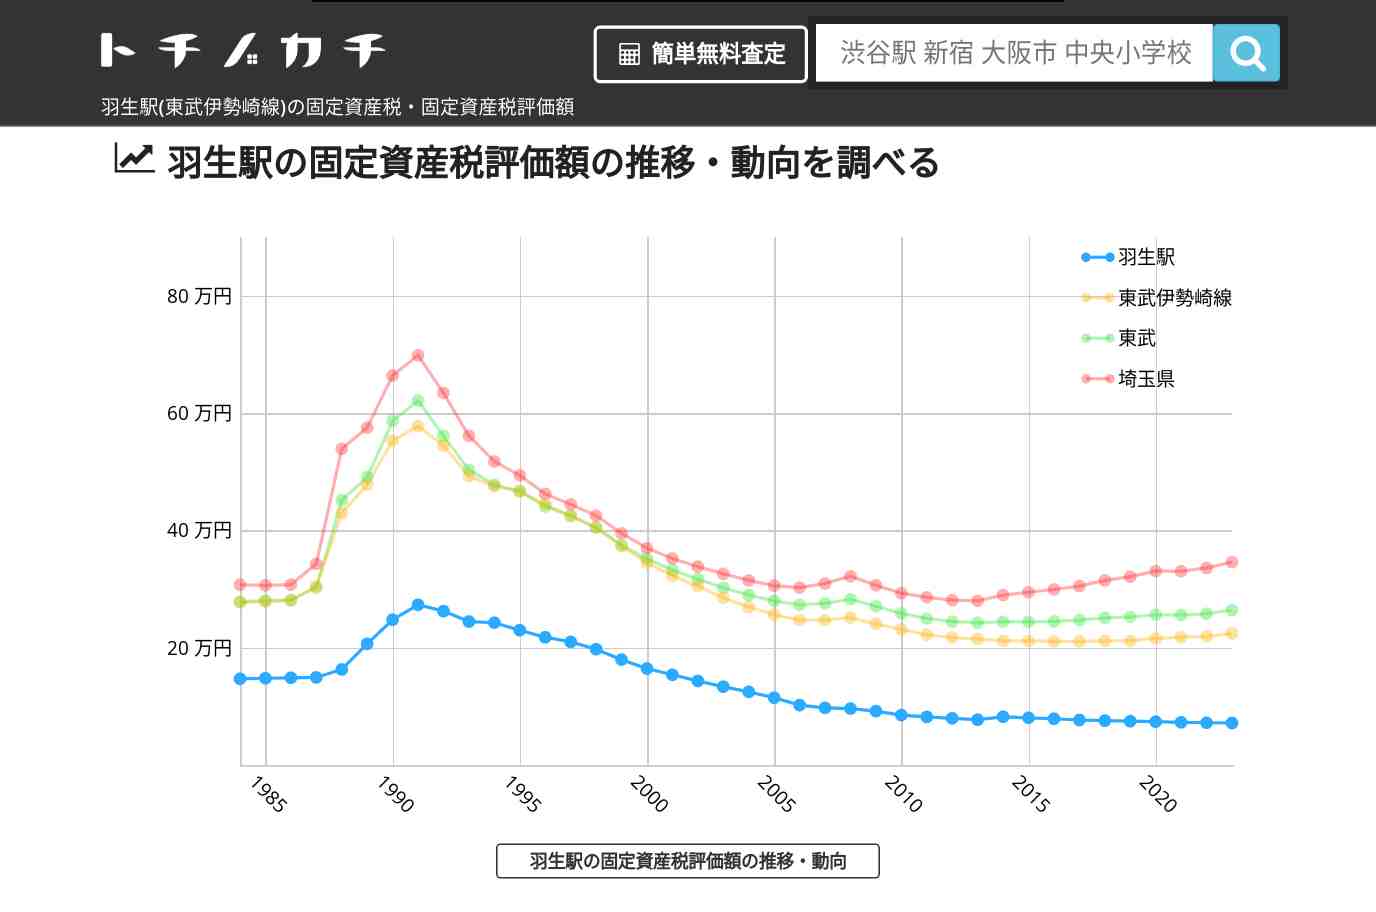 羽生駅(東武伊勢崎線)の固定資産税・固定資産税評価額 | トチノカチ